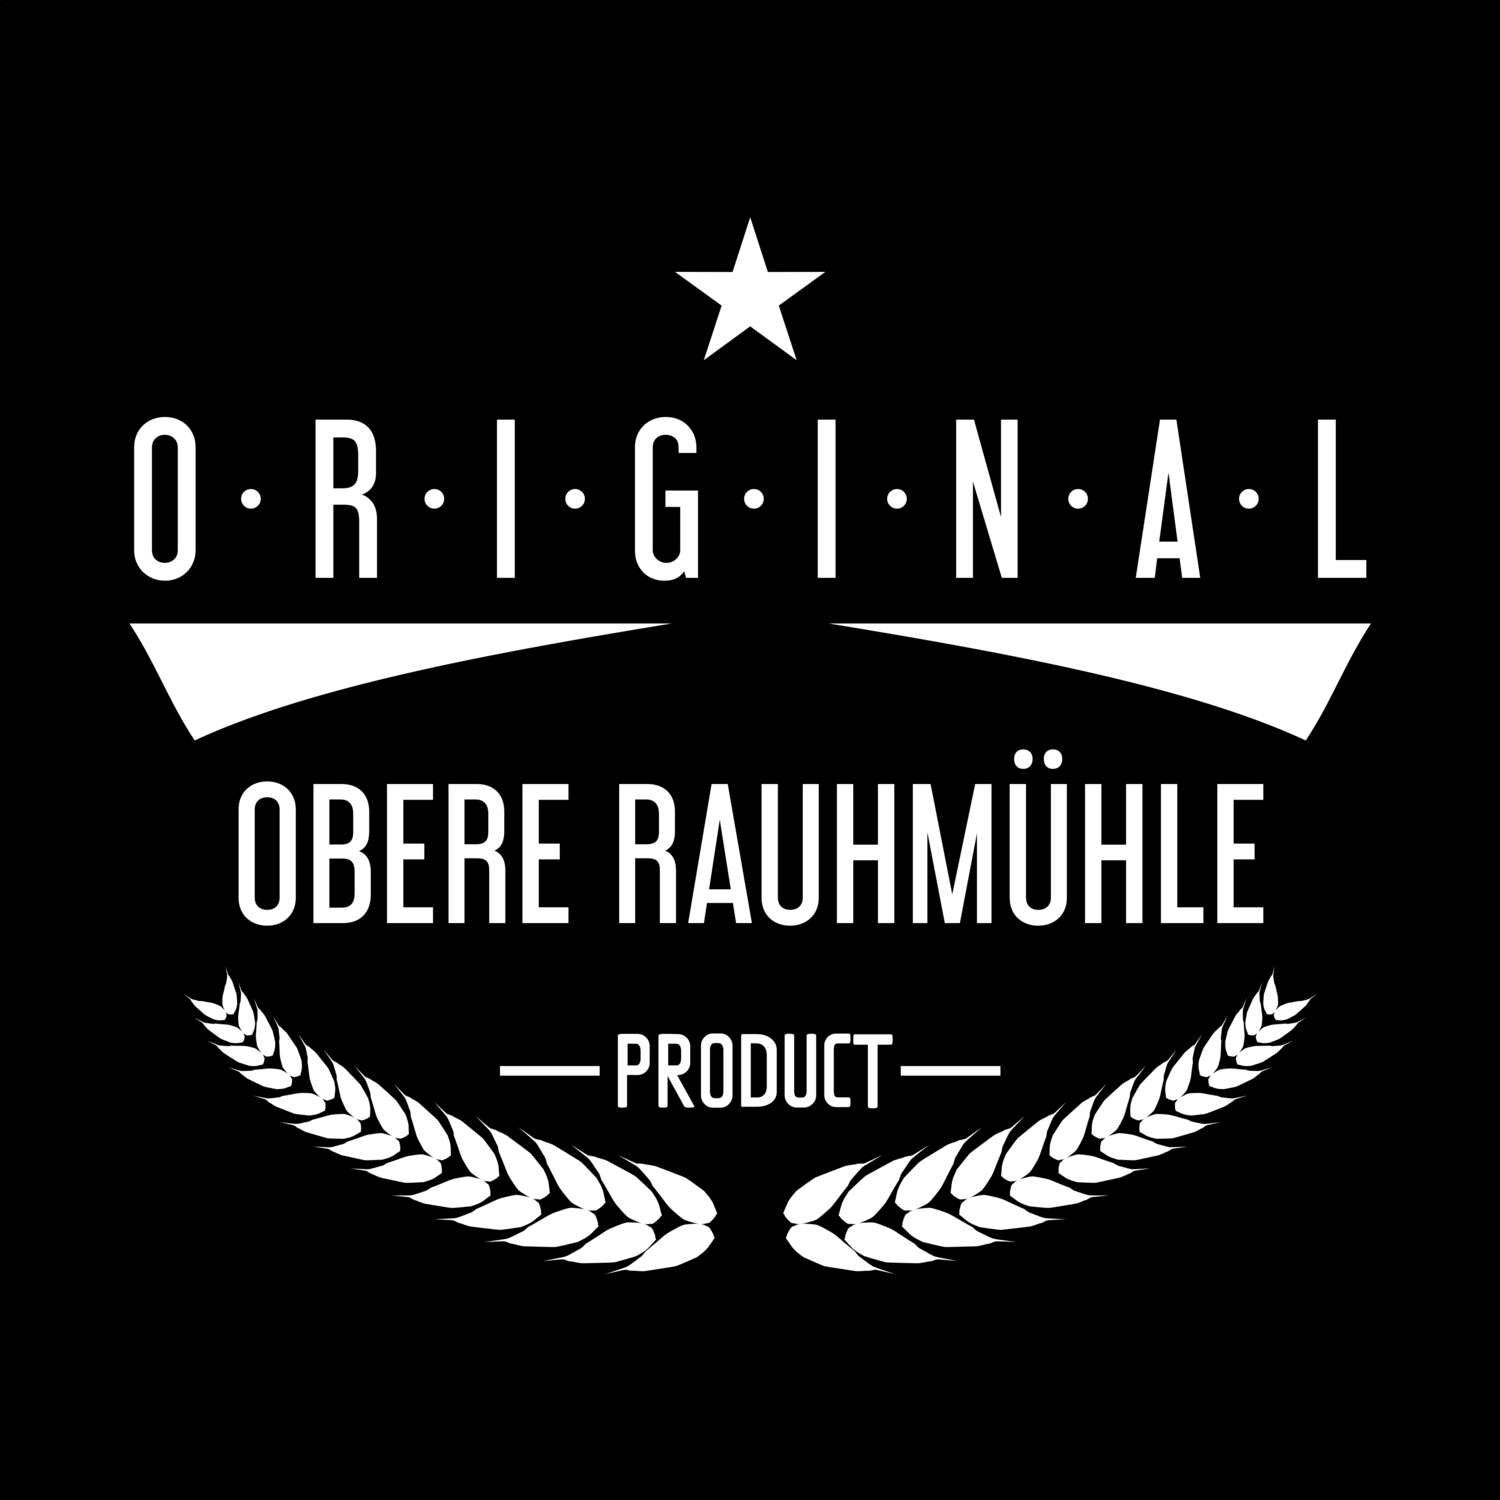 Obere Rauhmühle T-Shirt »Original Product«